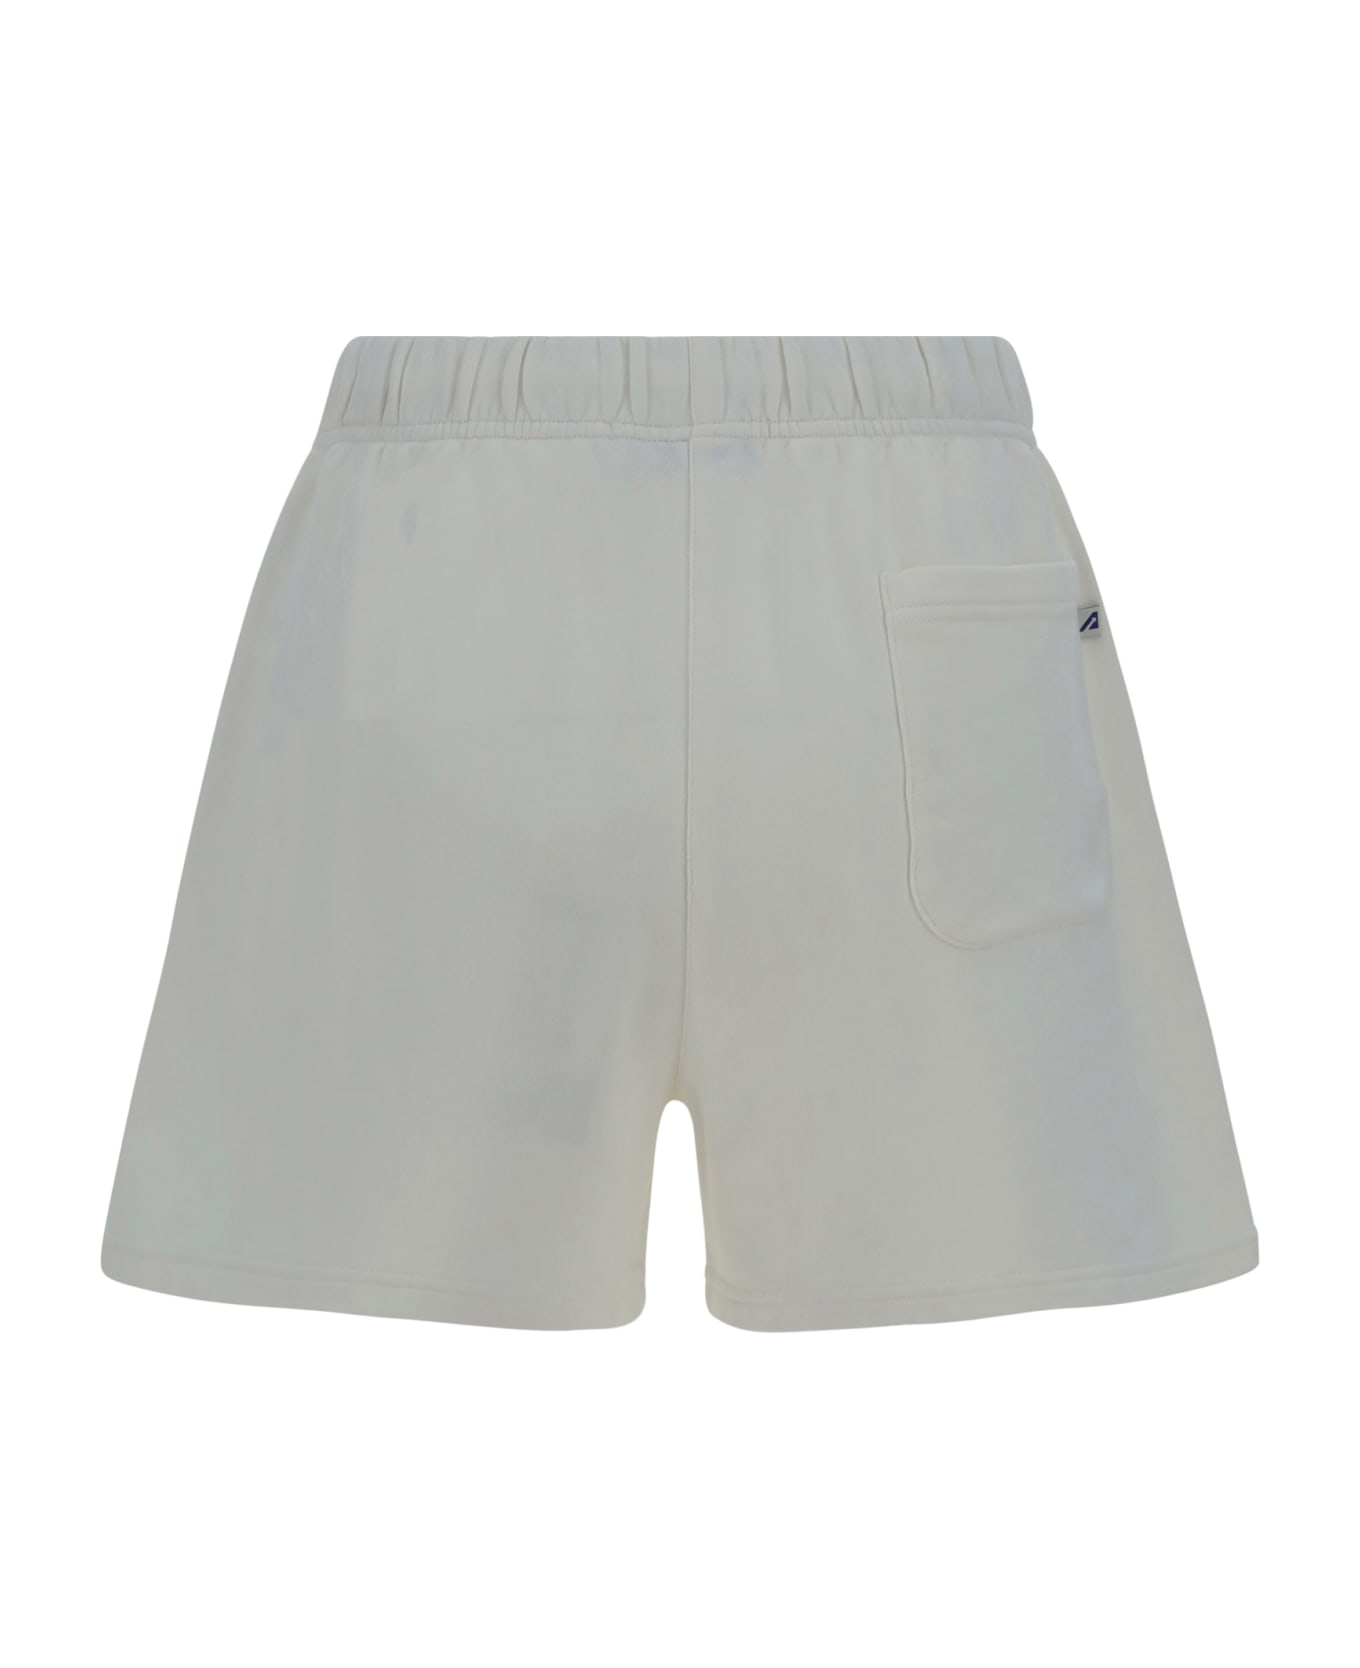 Autry Shorts - White